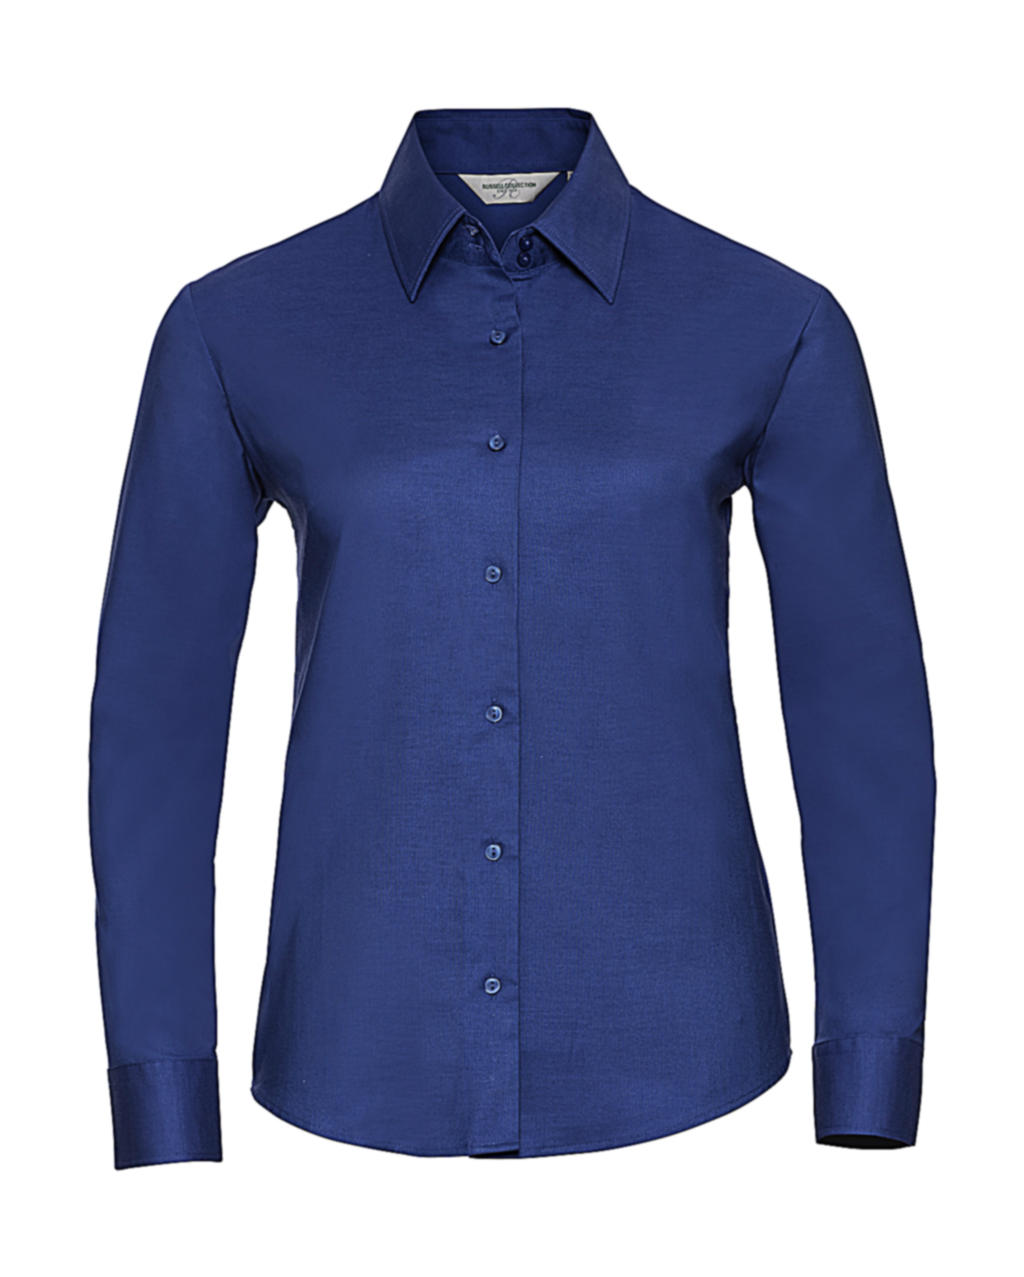  Ladies Classic Oxford Shirt LS in Farbe Aztec Blue